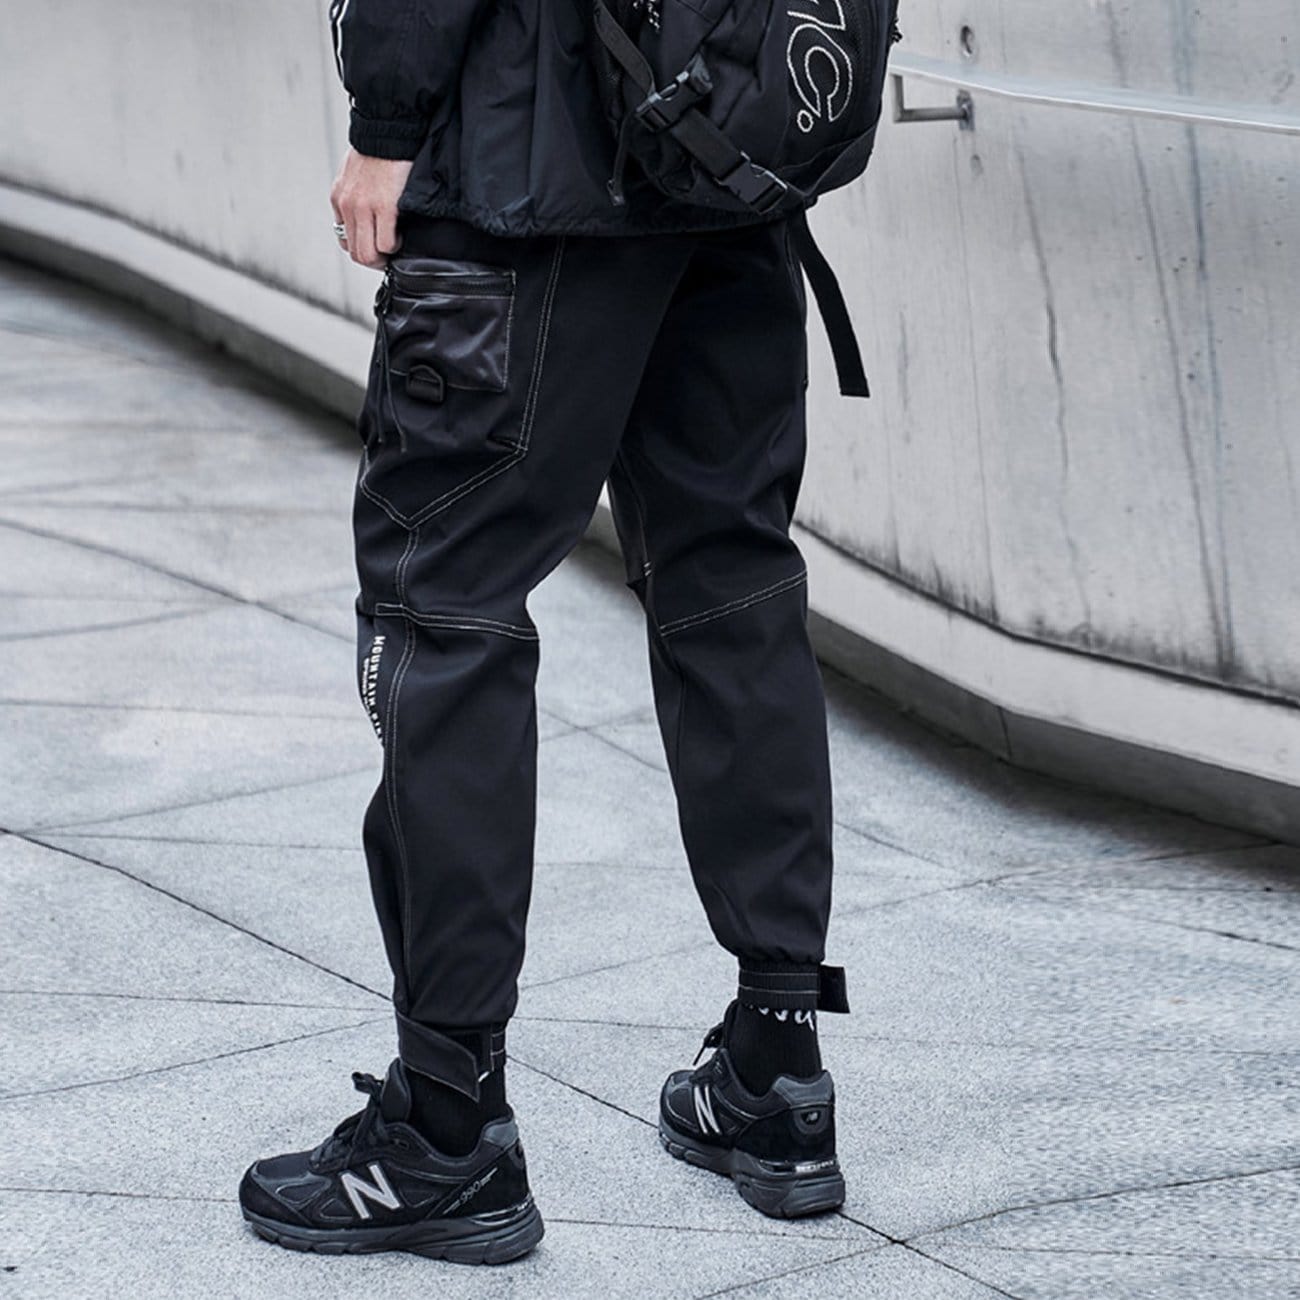 Function Bright Line Zipper Pockets Velcro Cargo Pants Streetwear Brand Techwear Combat Tactical YUGEN THEORY